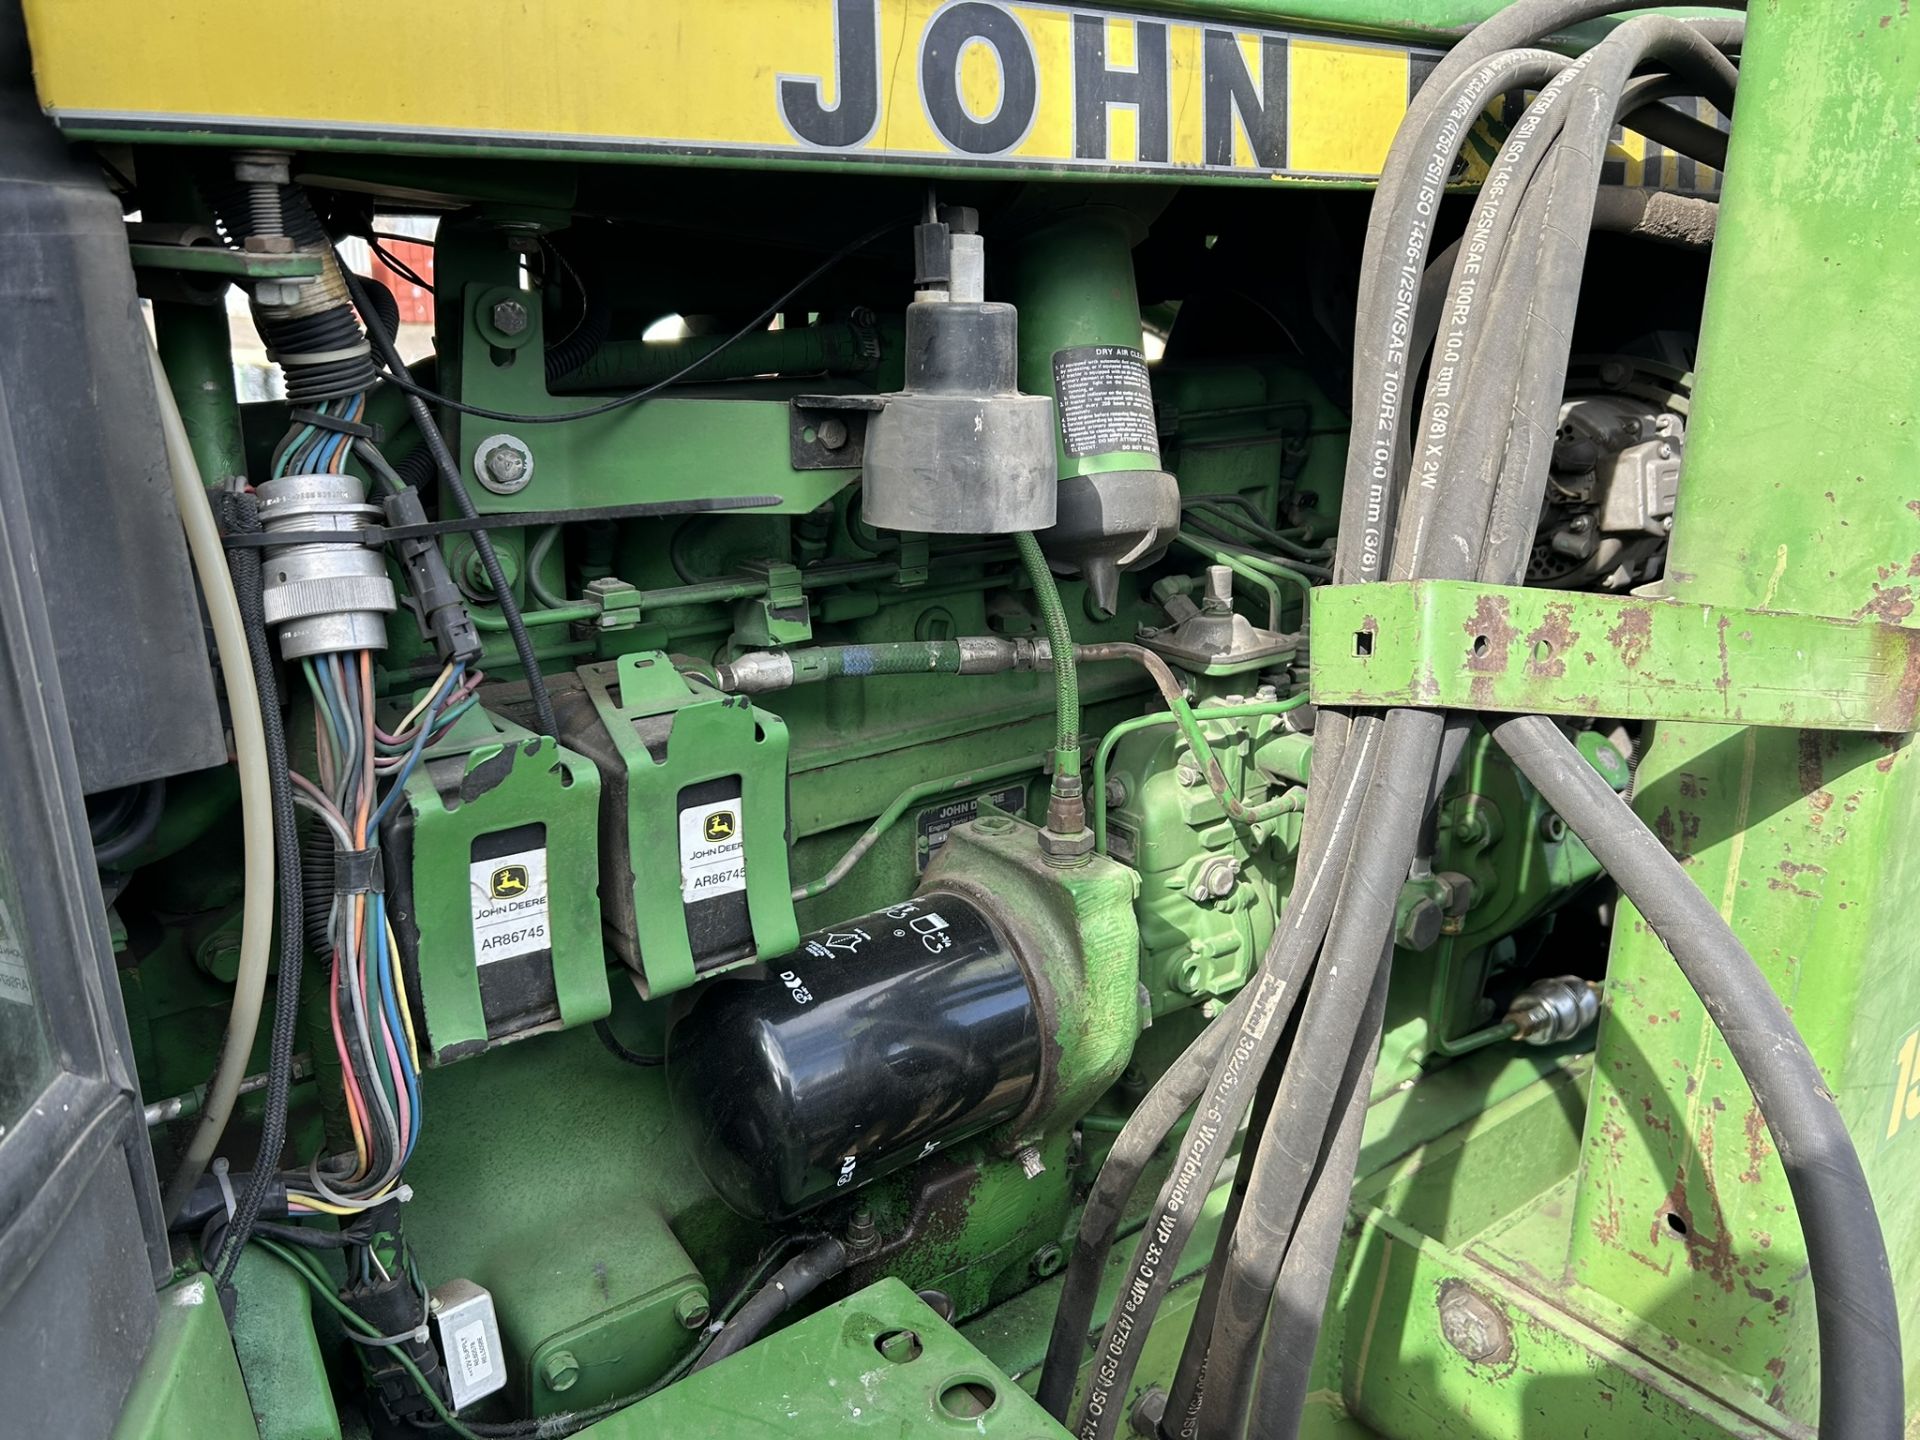 JOHN DEERE 4250 2WD TRACTOR, 18 SPEED POWERSHIFT, 3 SCV DUAL PTO, 8,164 HOURS SHOWING, JD 158 FEL - Image 4 of 10